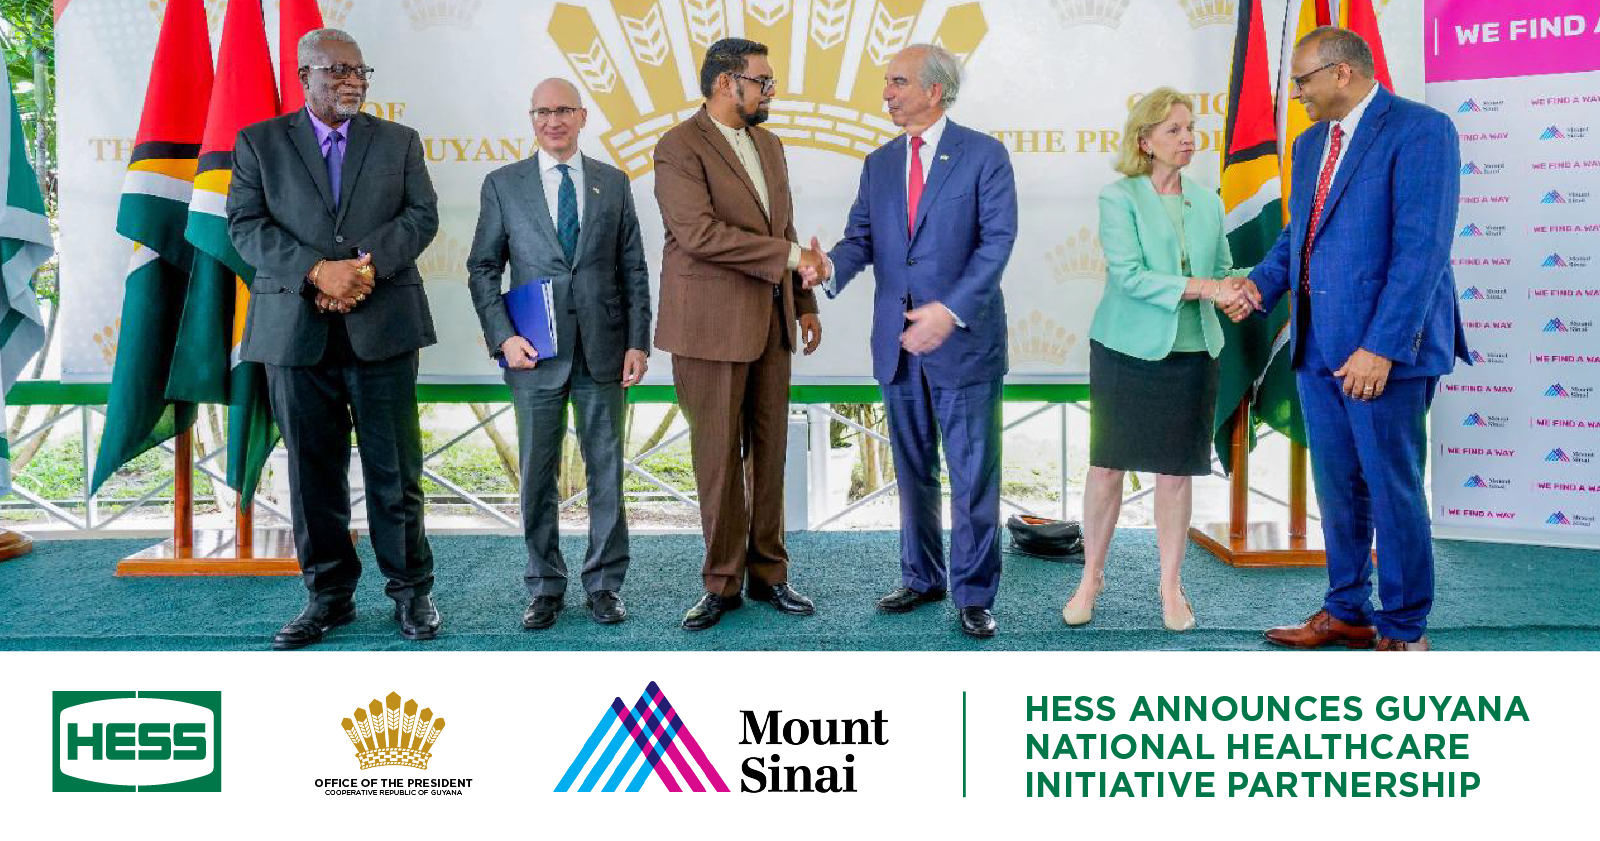 Hess-Mount-Sinai-Guyana-Announcement-Community